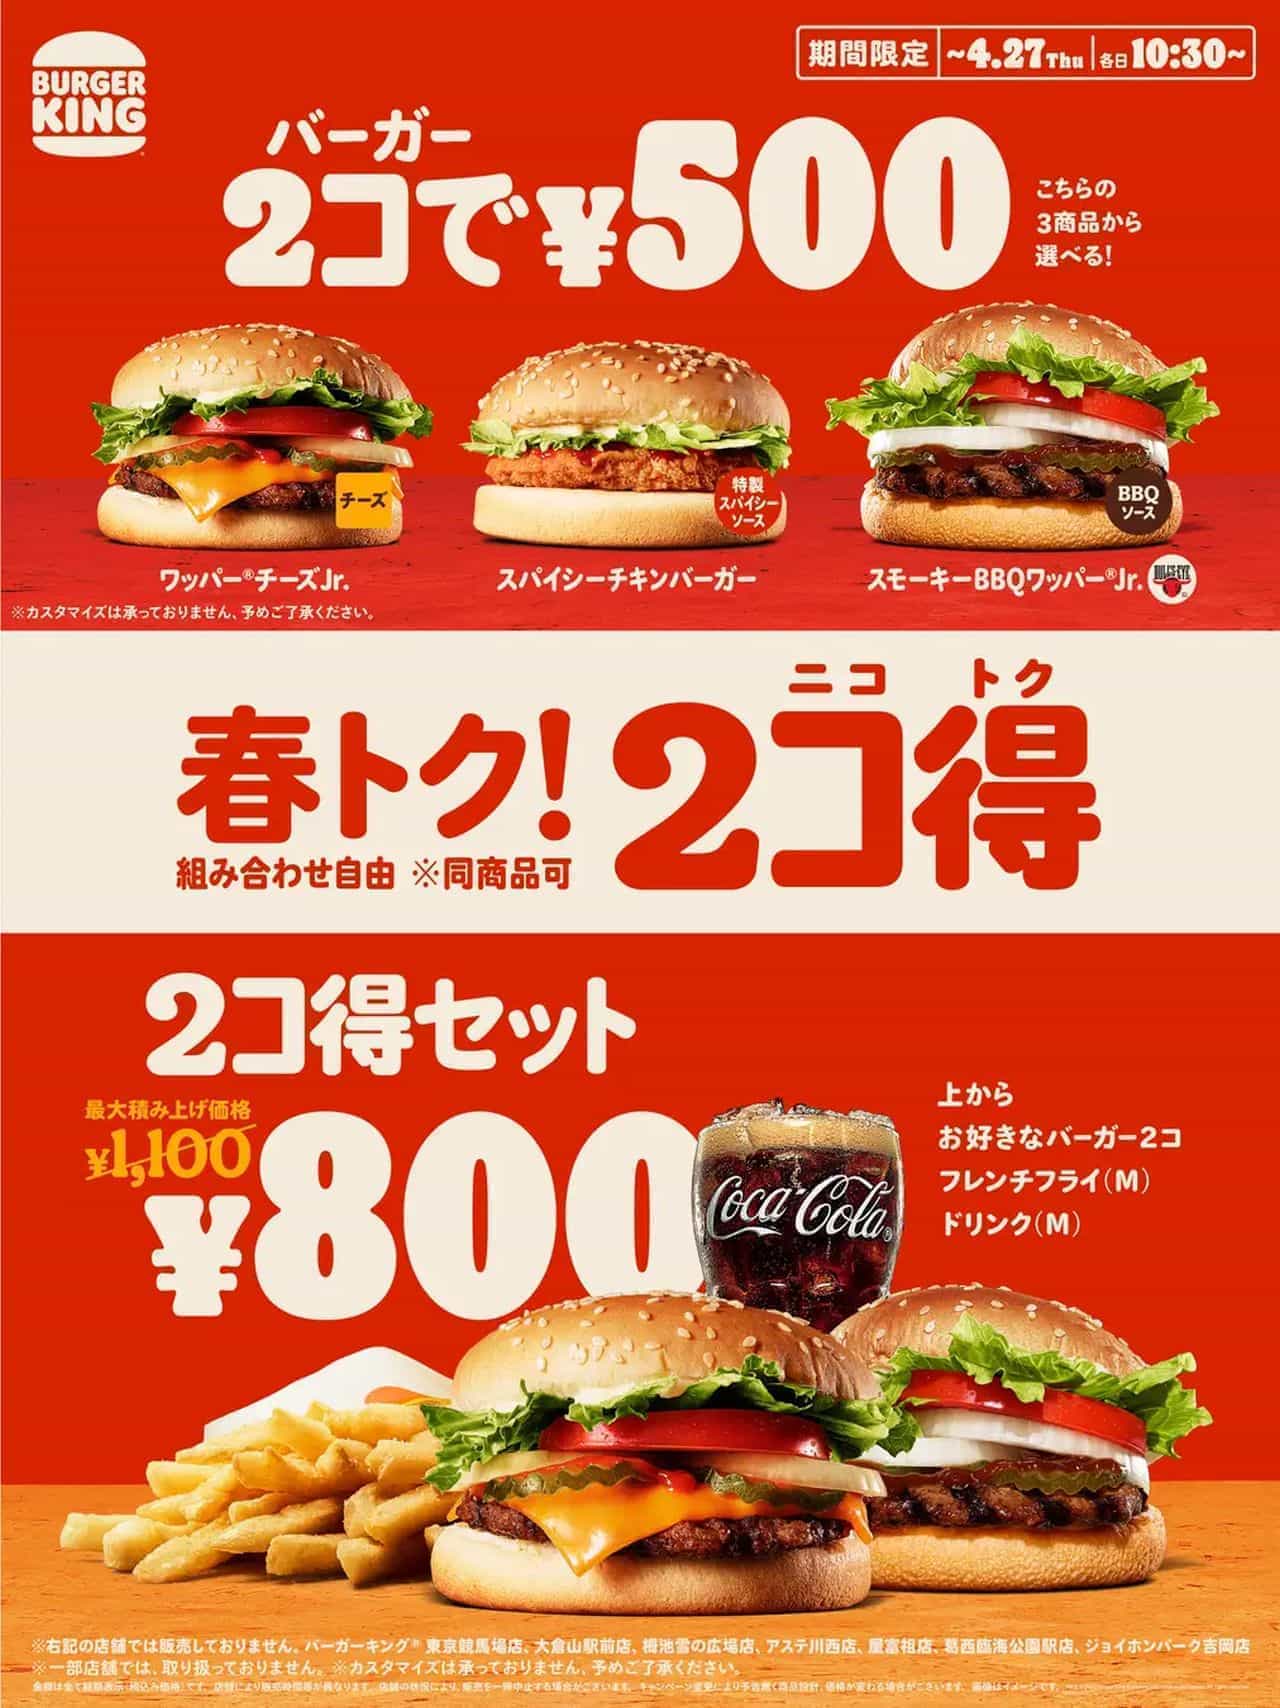 Burger King "2 koku (nikotoku)